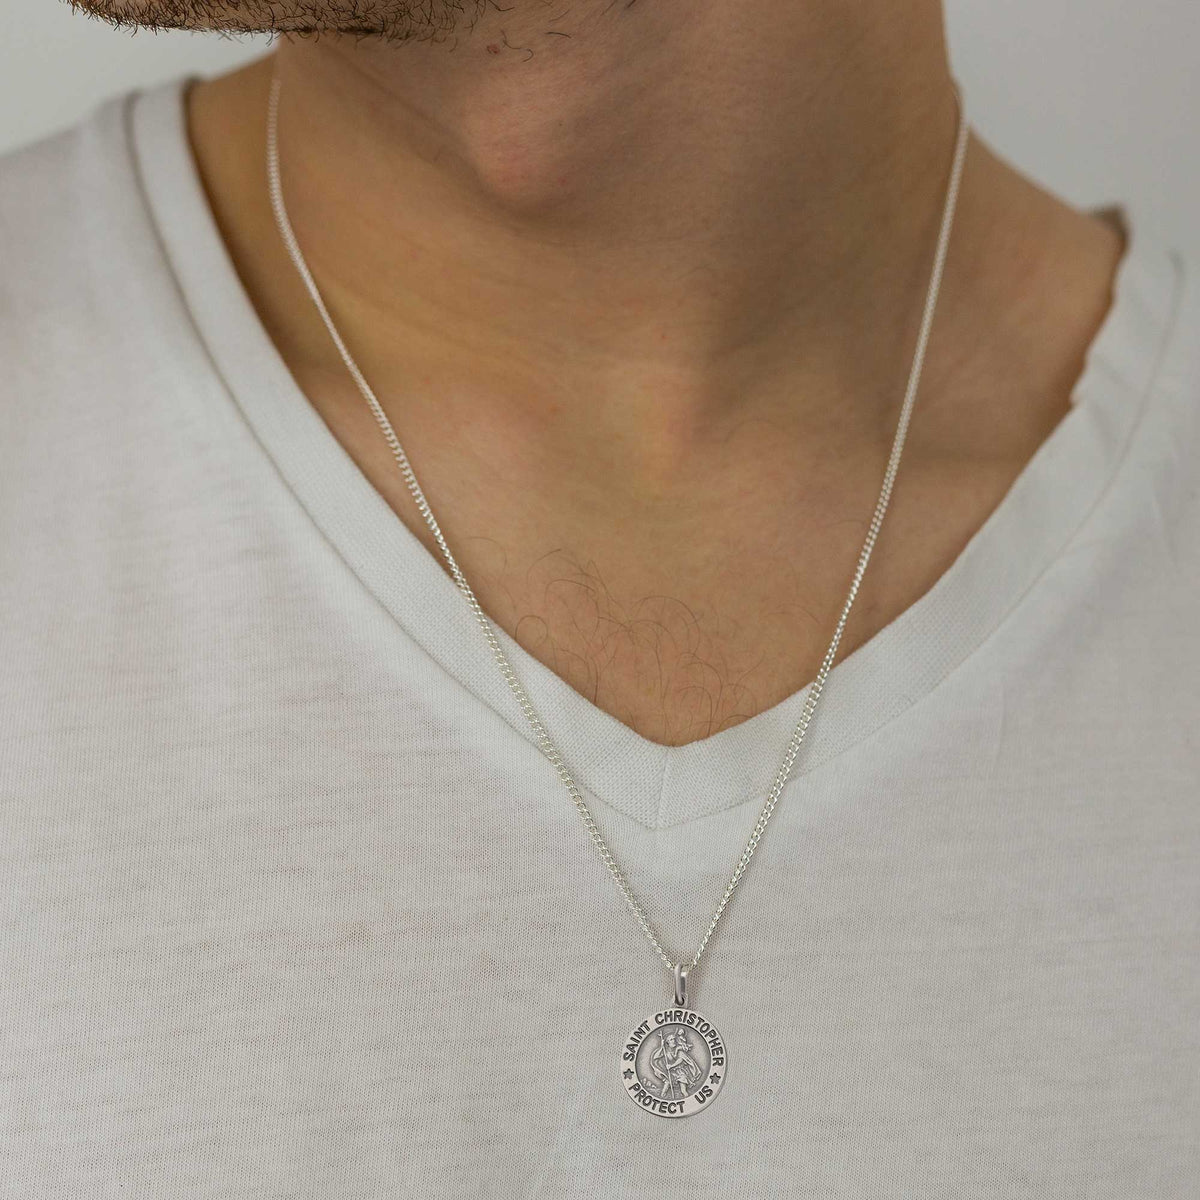 saint christopher protect us silver necklace vintage oxidised